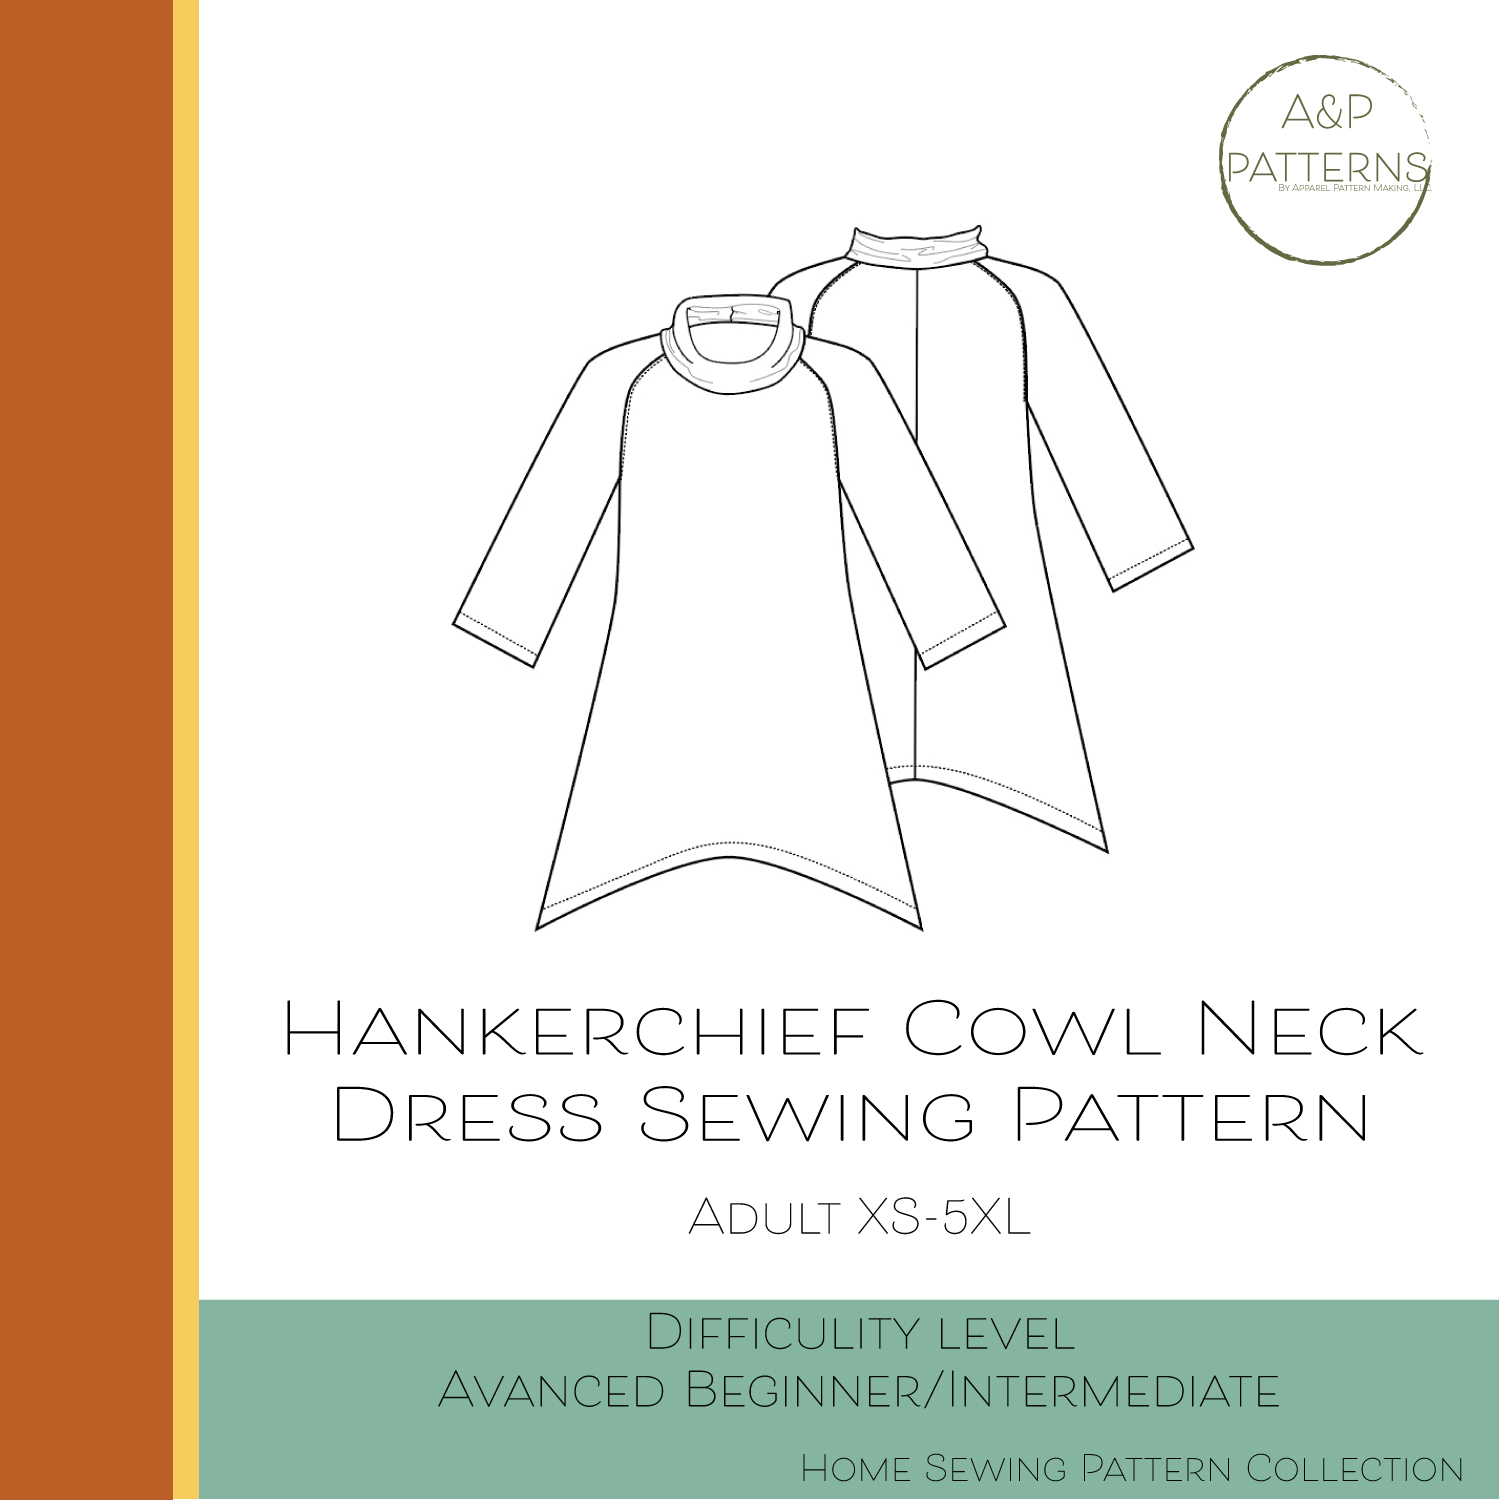 Handkerchief Cowl Neck Dress Sewing Pattern